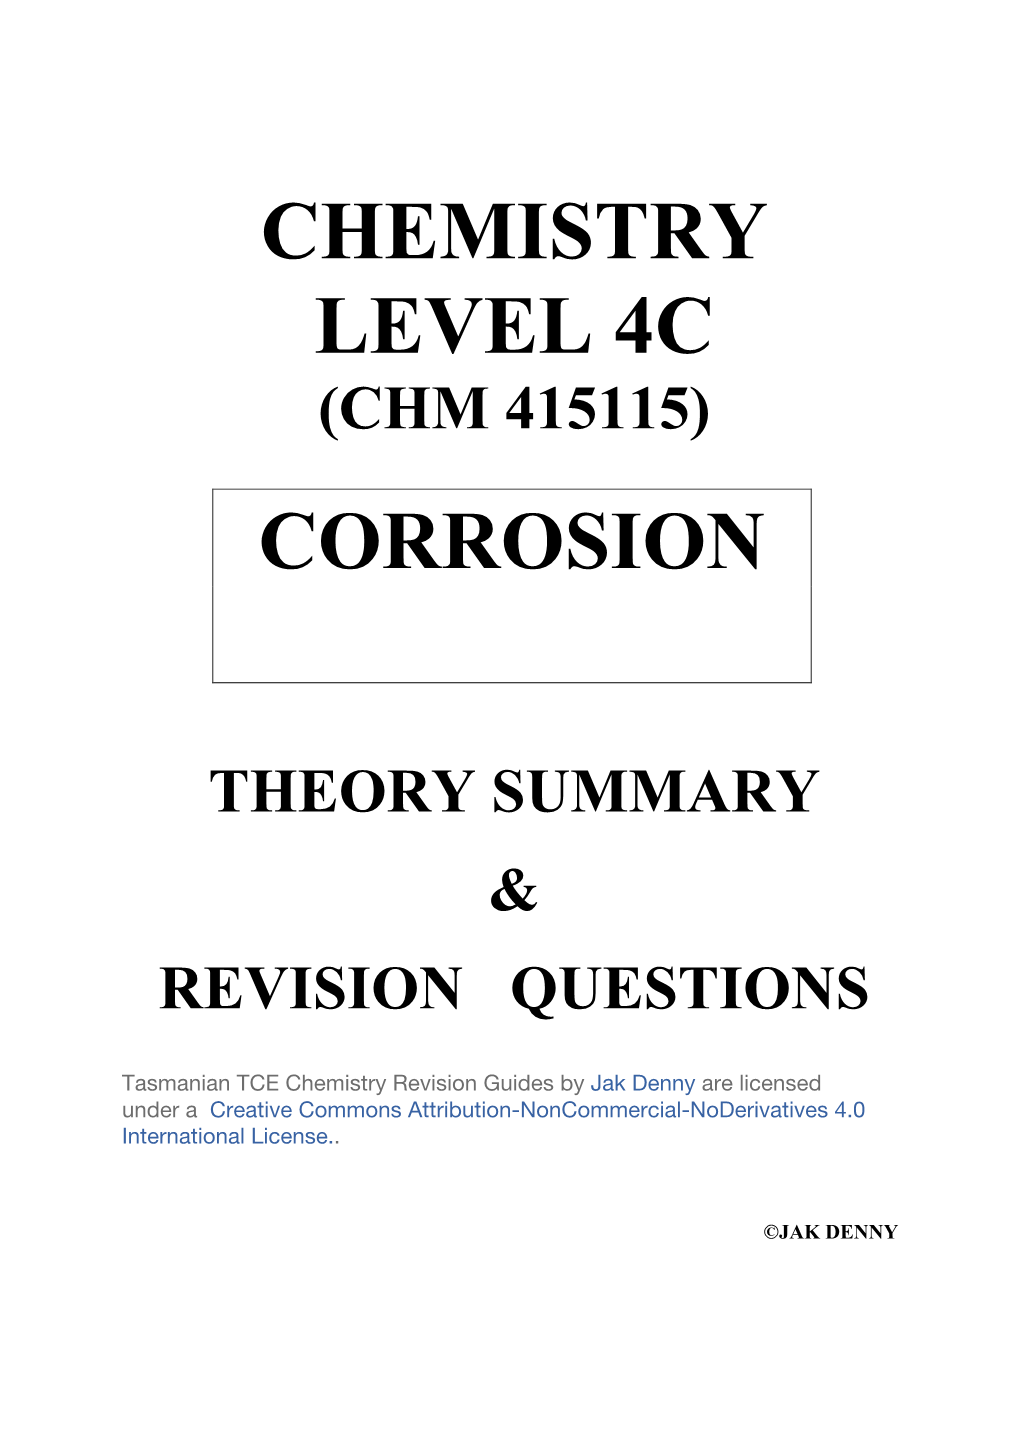 Chemistry Level 4C Corrosion